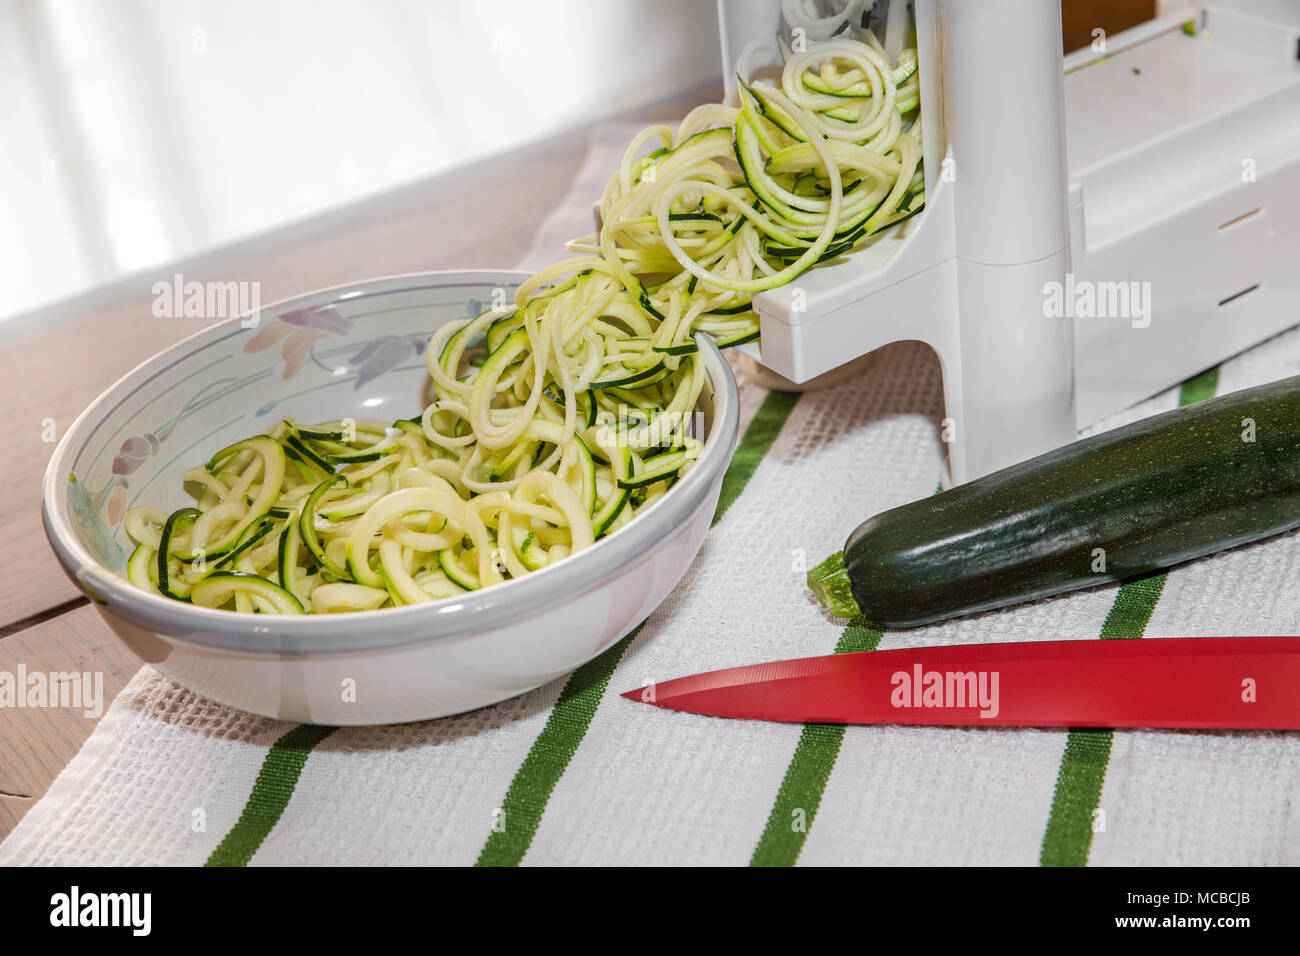 https://c8.alamy.com/comp/MCBCJB/spiral-zucchini-noodles-called-zoodles-prepared-in-spiralizer-kitchen-gadget-MCBCJB.jpg